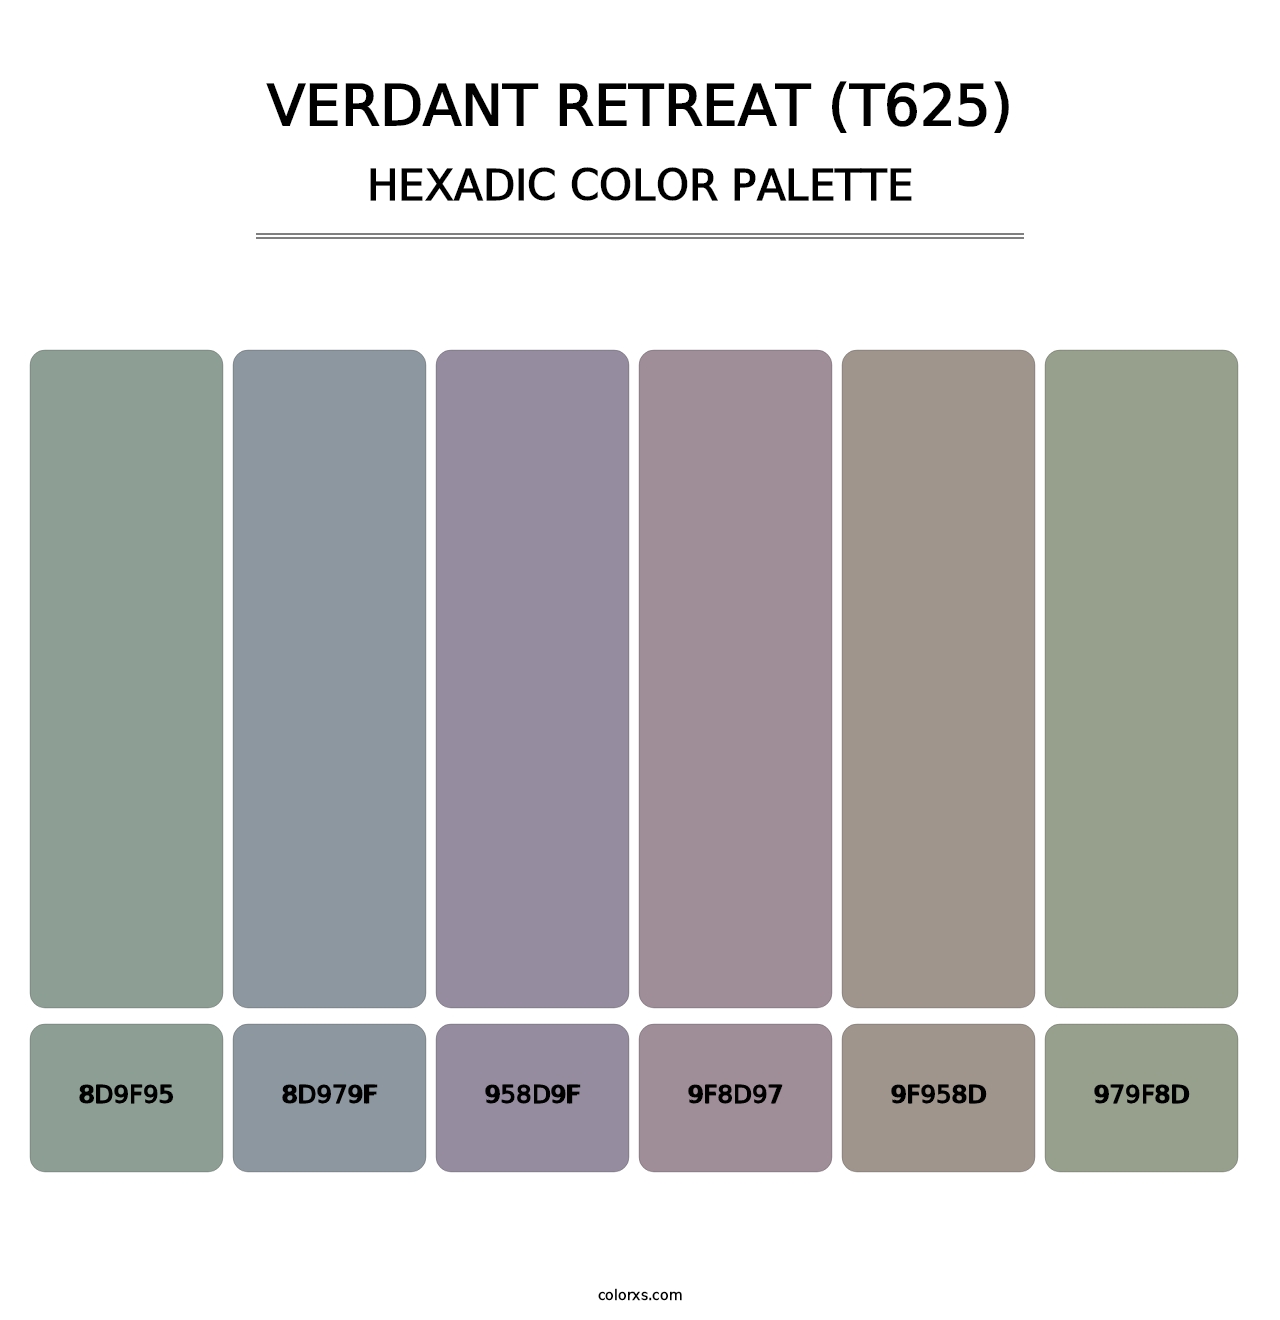 Verdant Retreat (T625) - Hexadic Color Palette